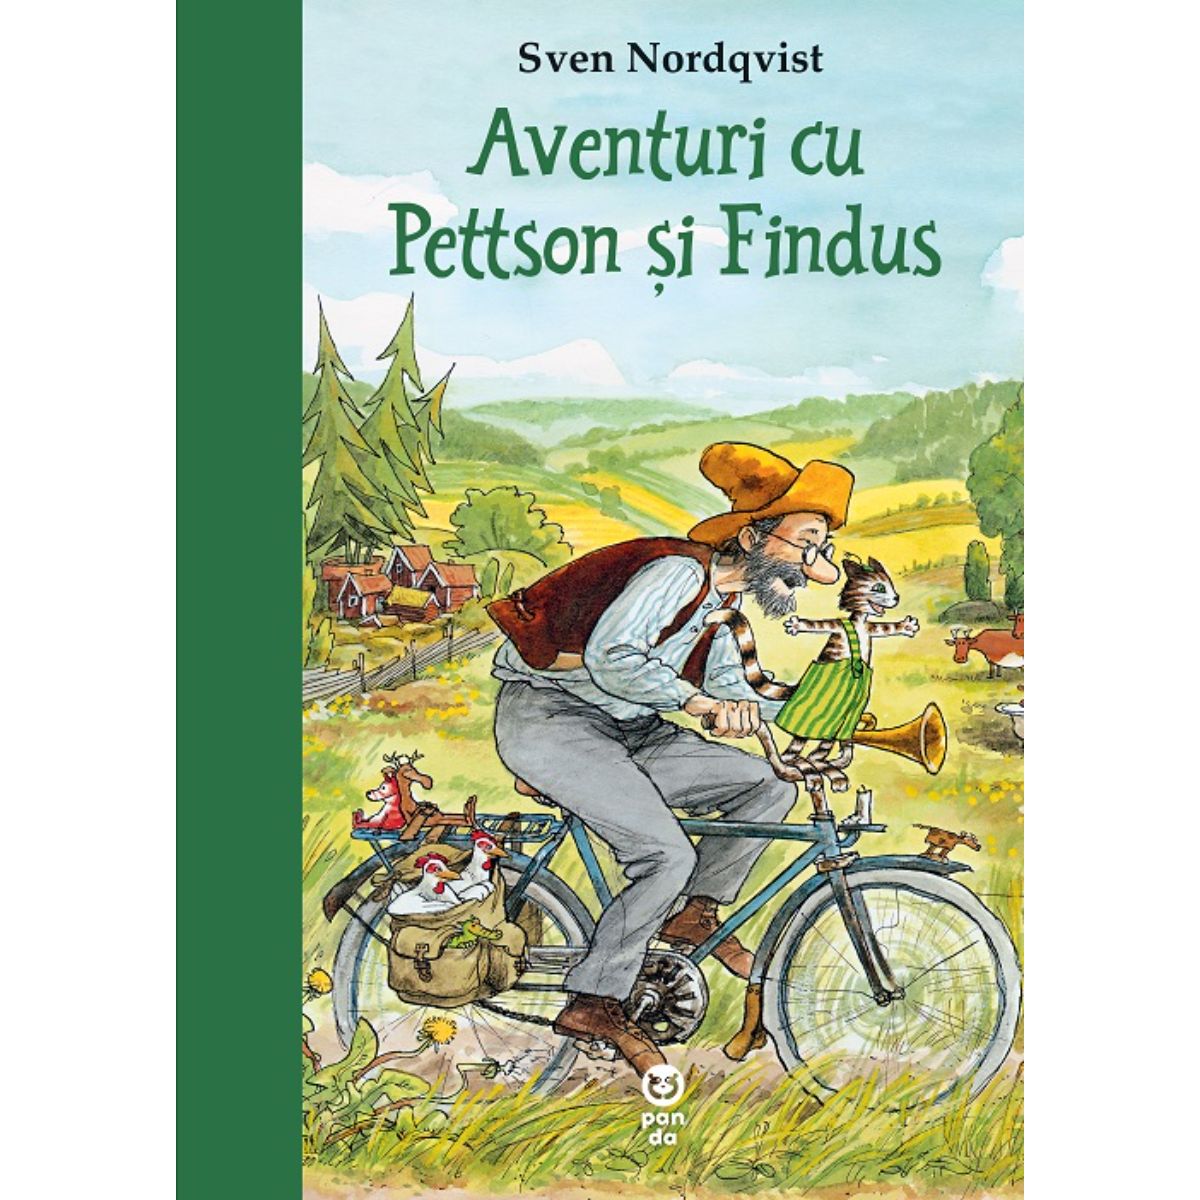 Aventuri cu Pettson si Findus, Sven Nordqvist